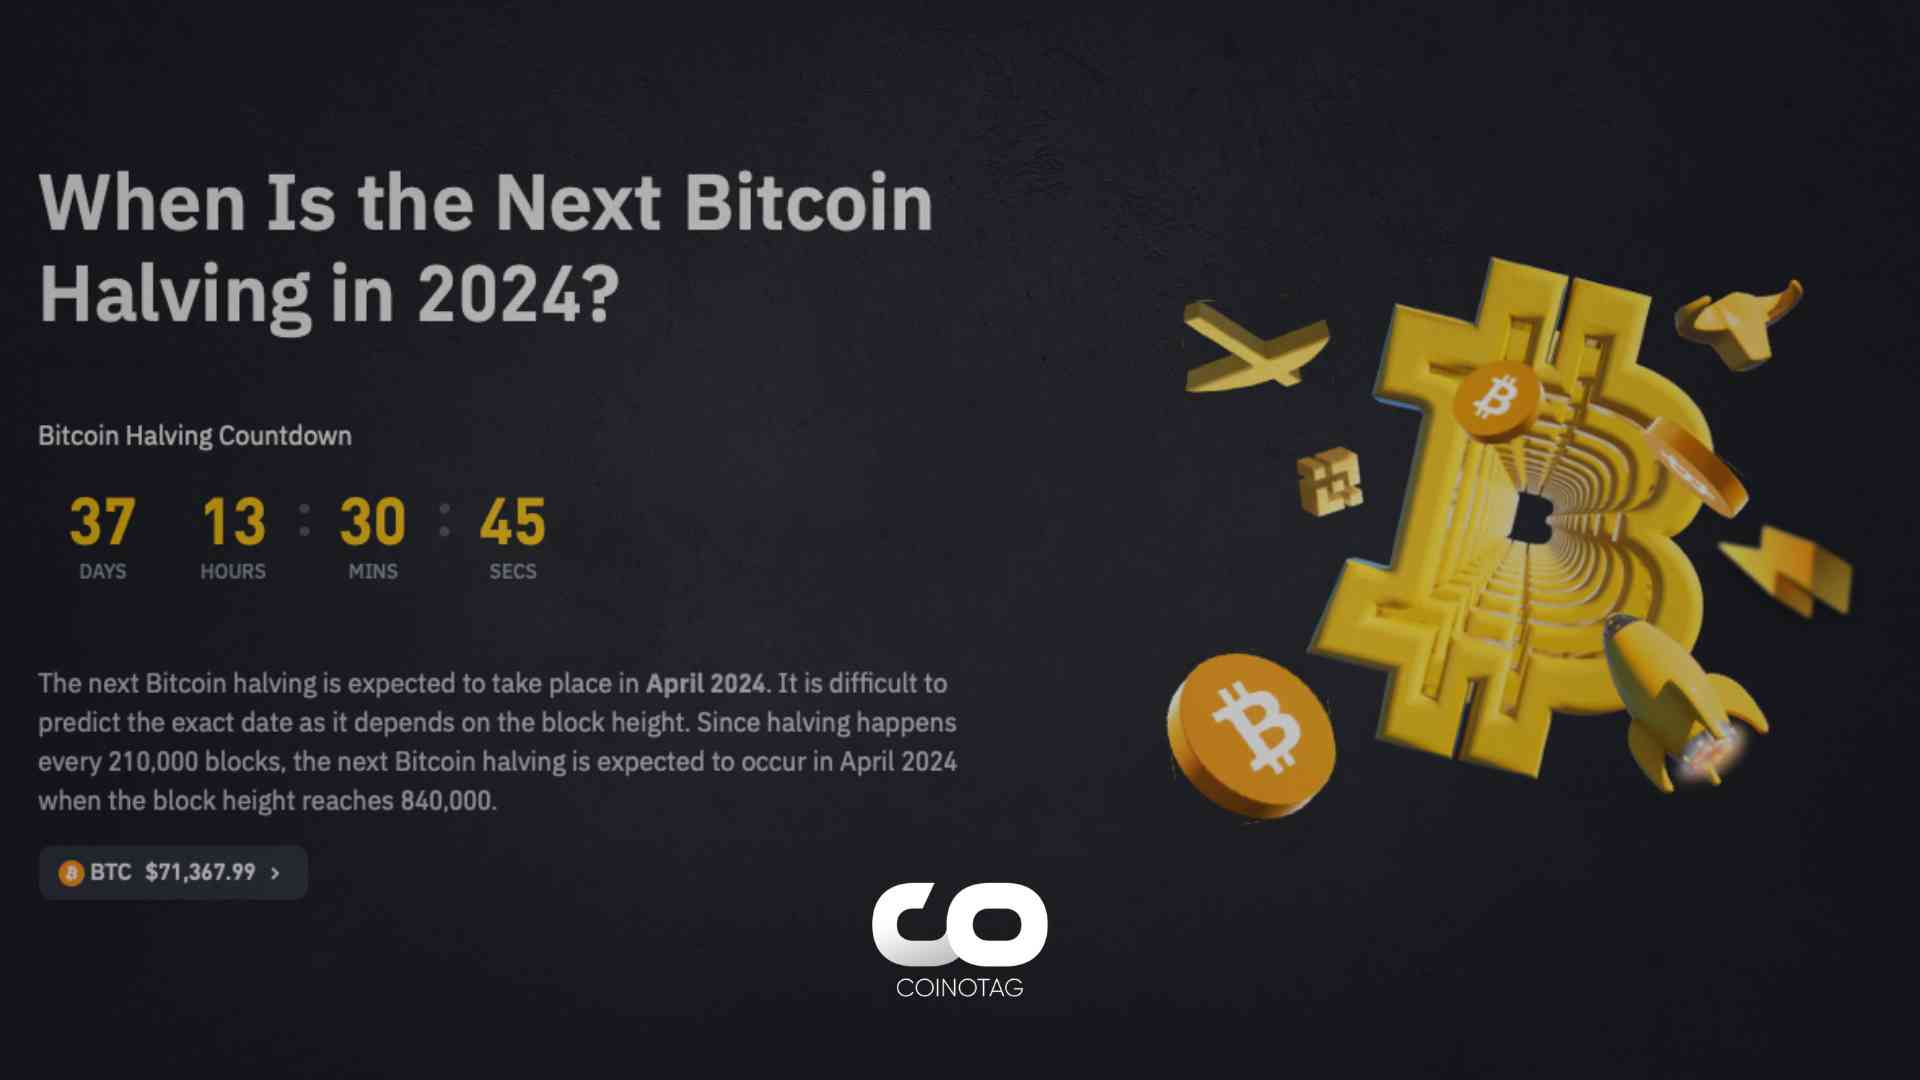 Bitcoin Halving Countdown 12 March